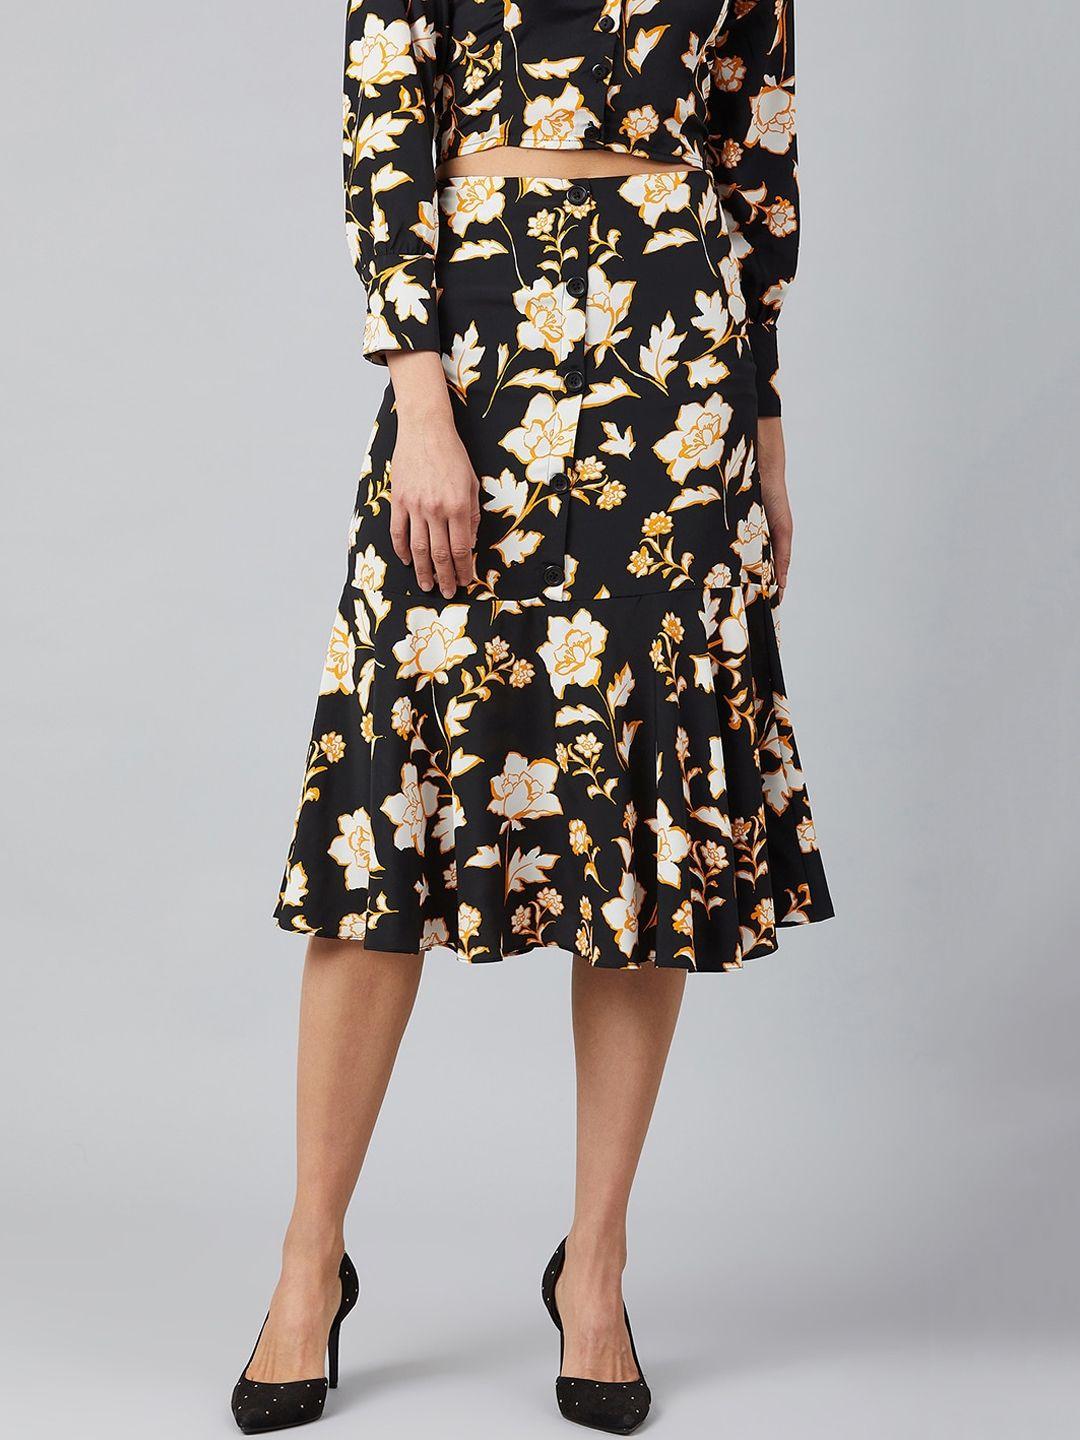 carlton london women black & white floral printed trumpet midi skirt